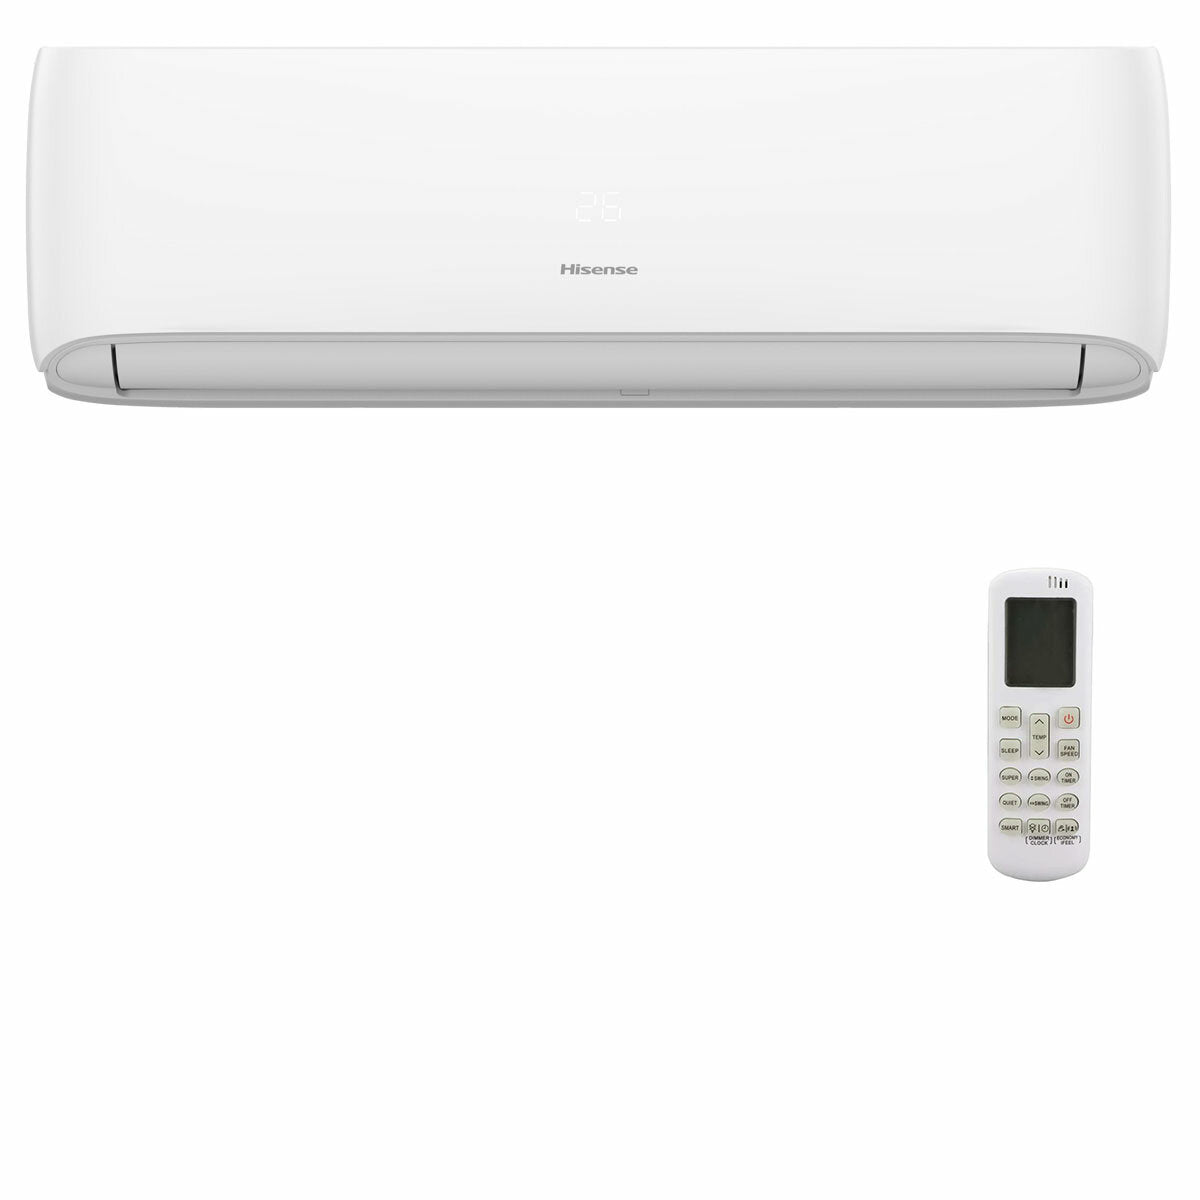 Hisense Hi-Comfort trial split air conditioner 7000+9000+9000 BTU inverter A++ wifi outdoor unit 6.3 kW